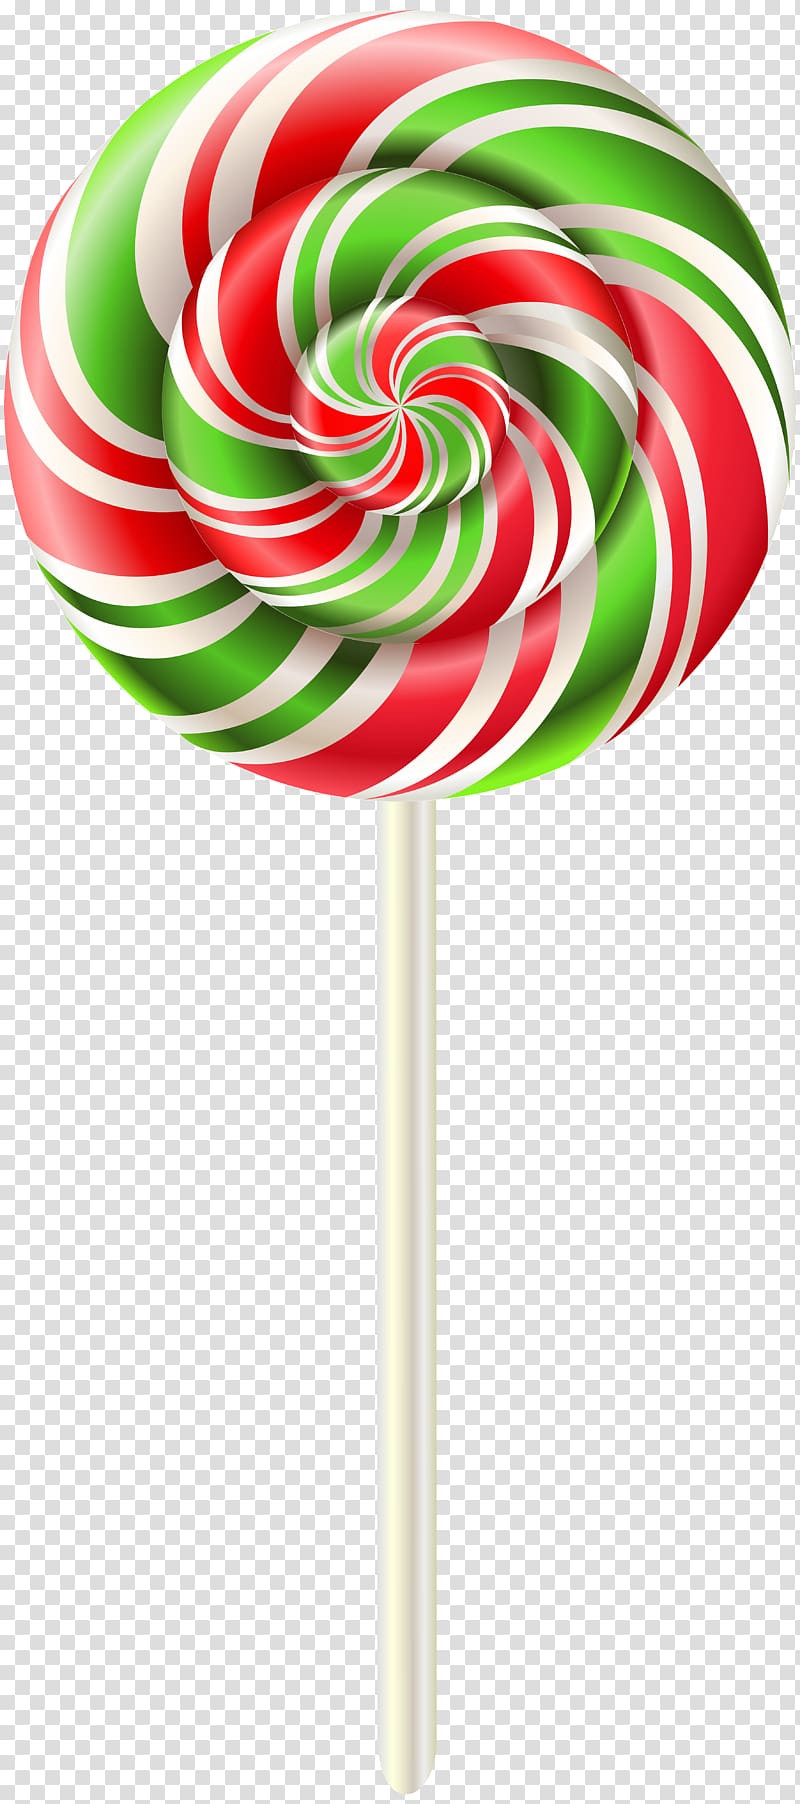 Food Candy Wallpaper Lollipop Sweets  Wallpaperforu